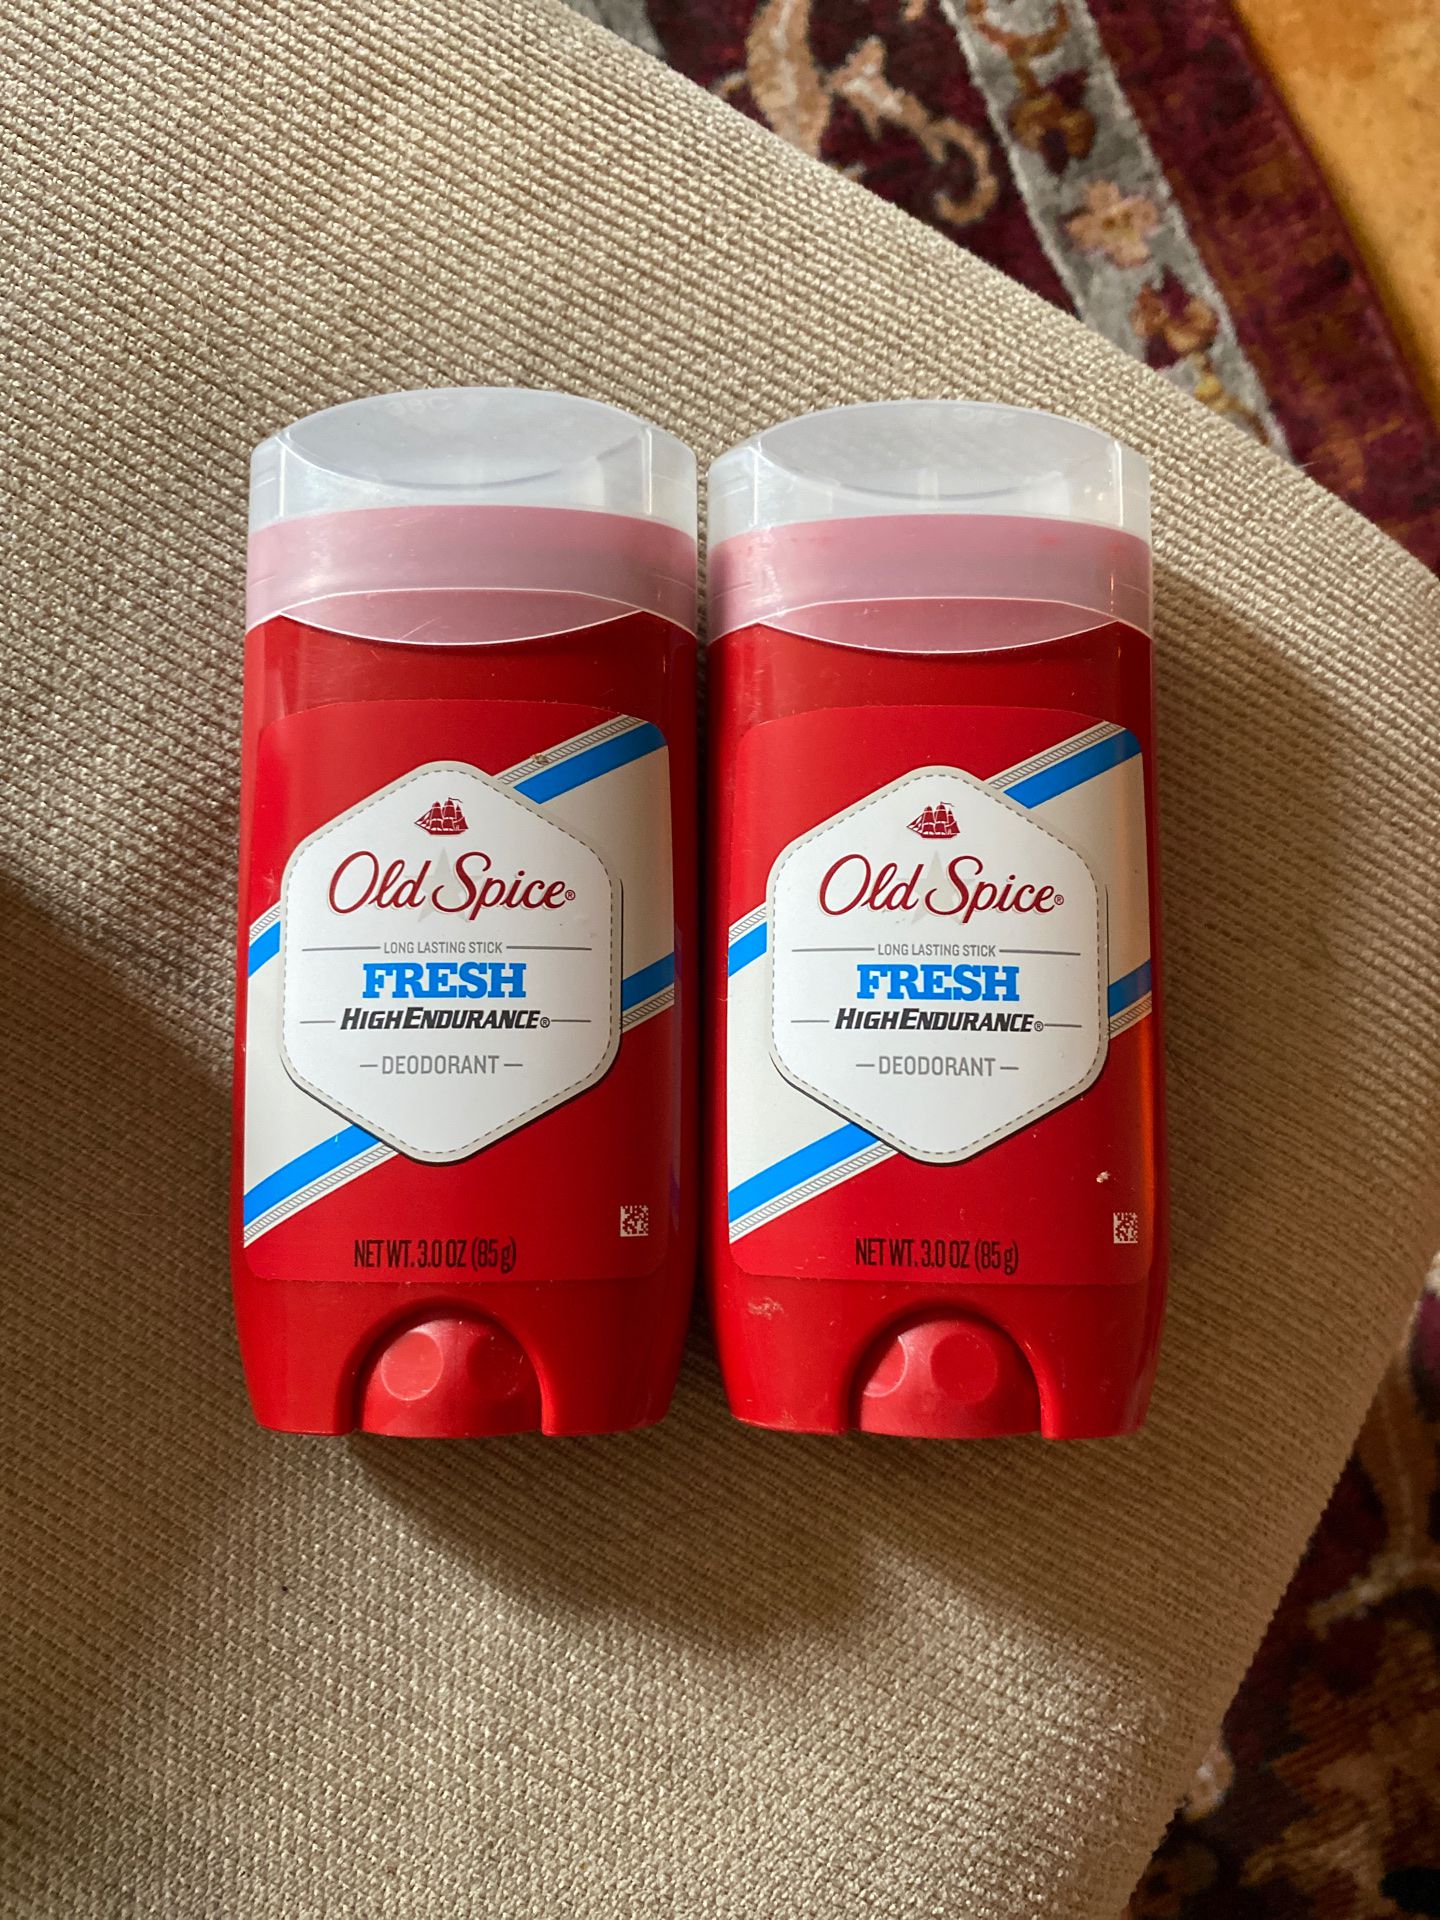 Old Spice fresh deodorant for men